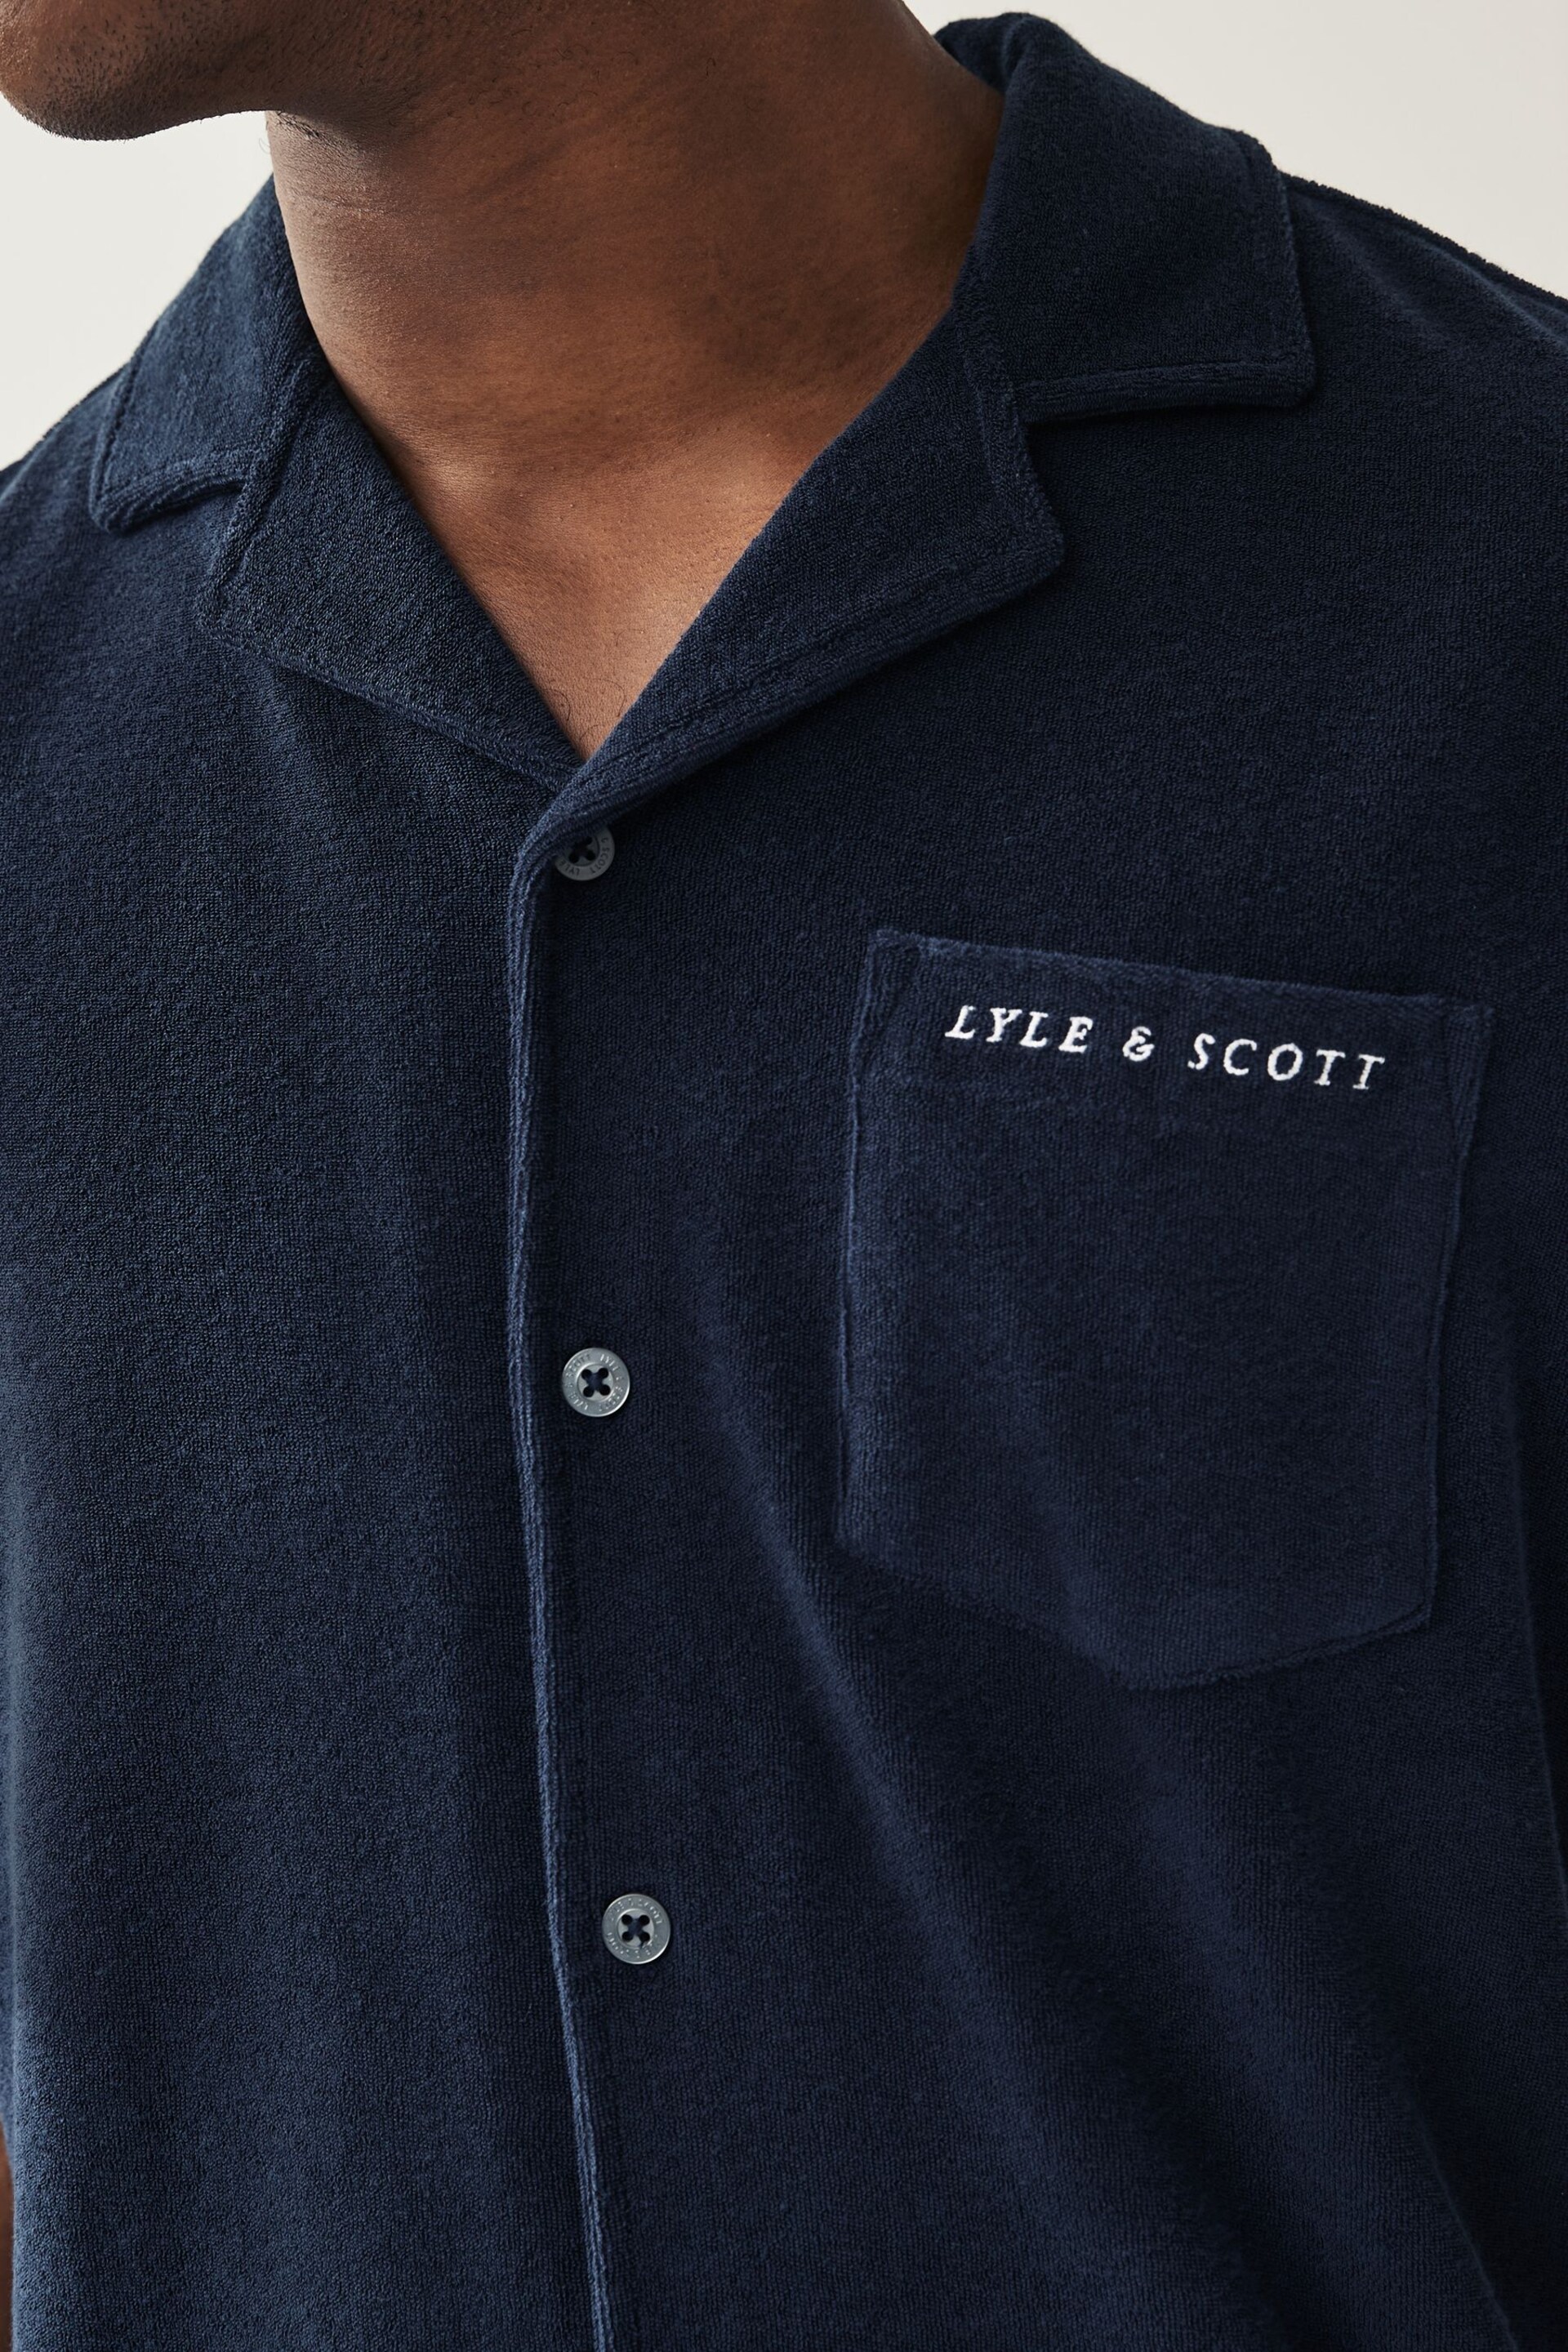 Lyle & Scott Towelling Resort Shirt - Image 4 of 5